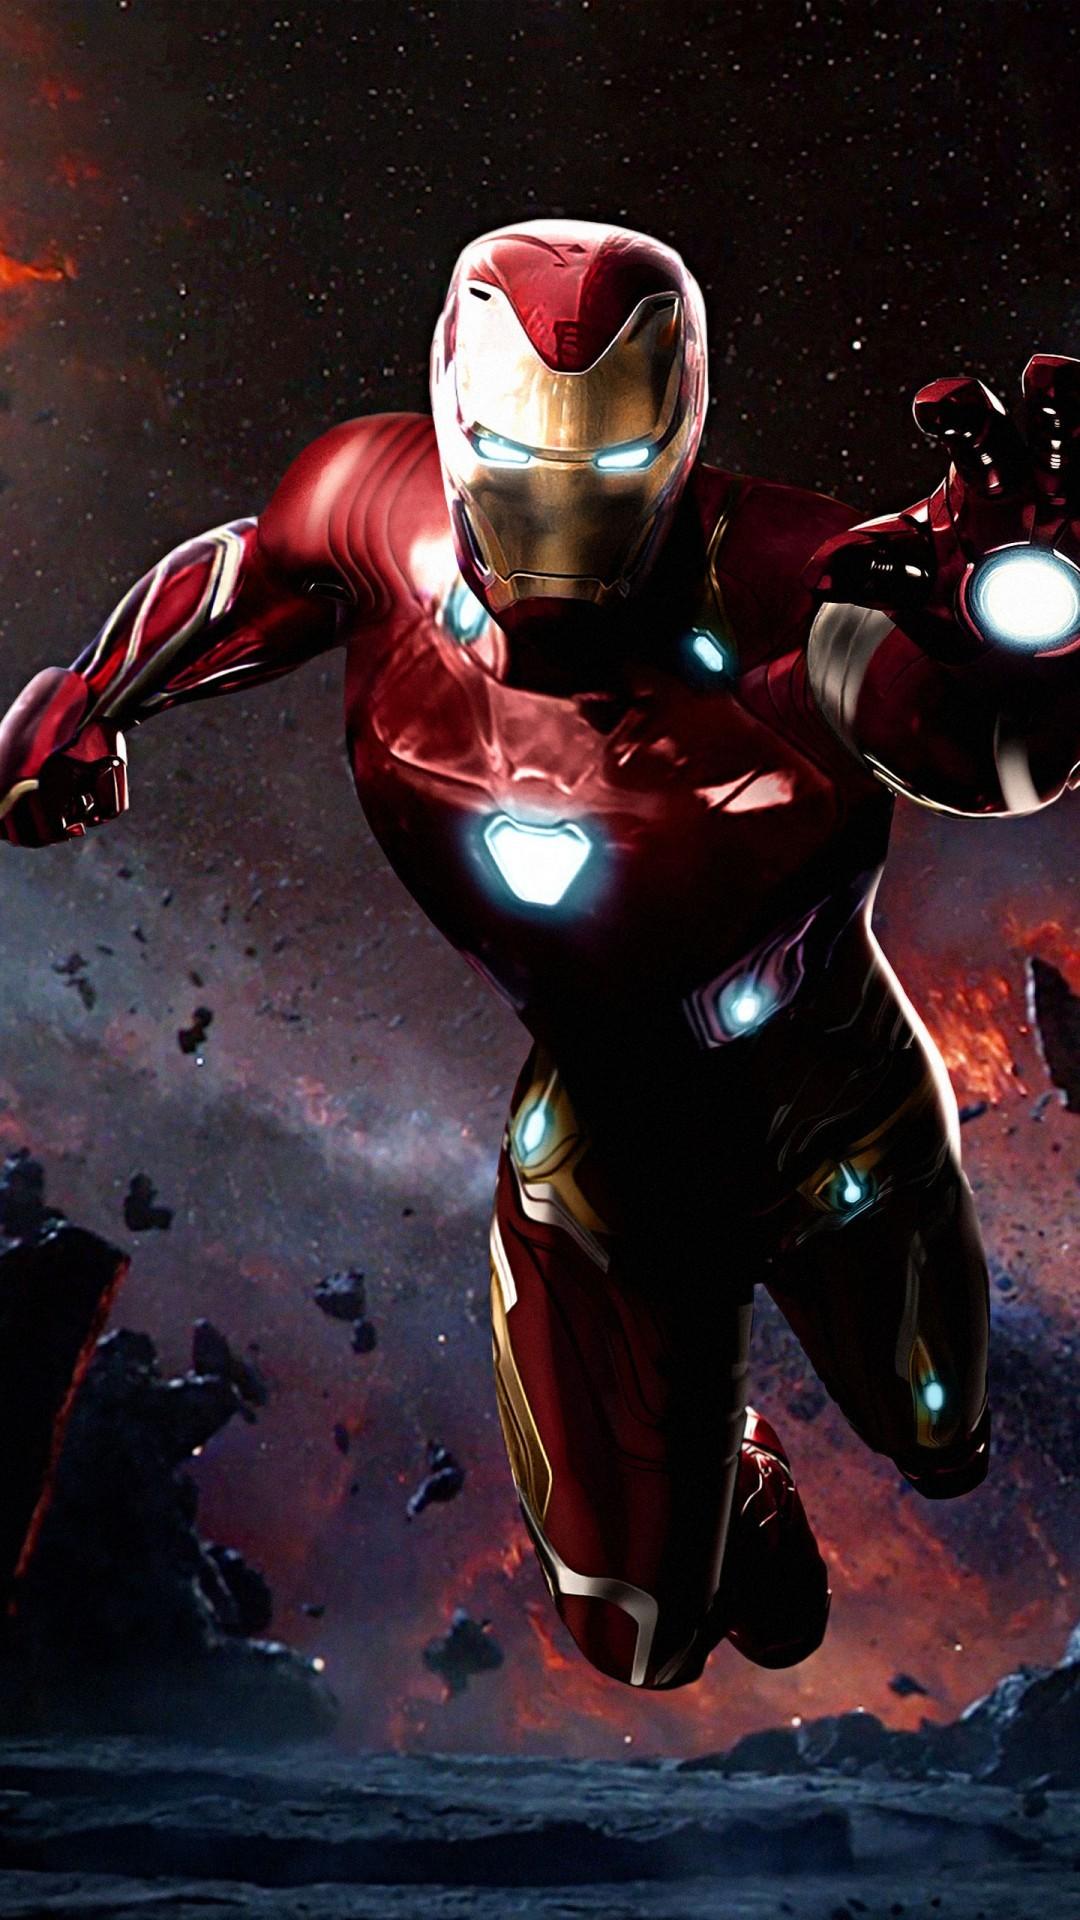 Free Iron Man Avengers Infinity War phone wallpaper